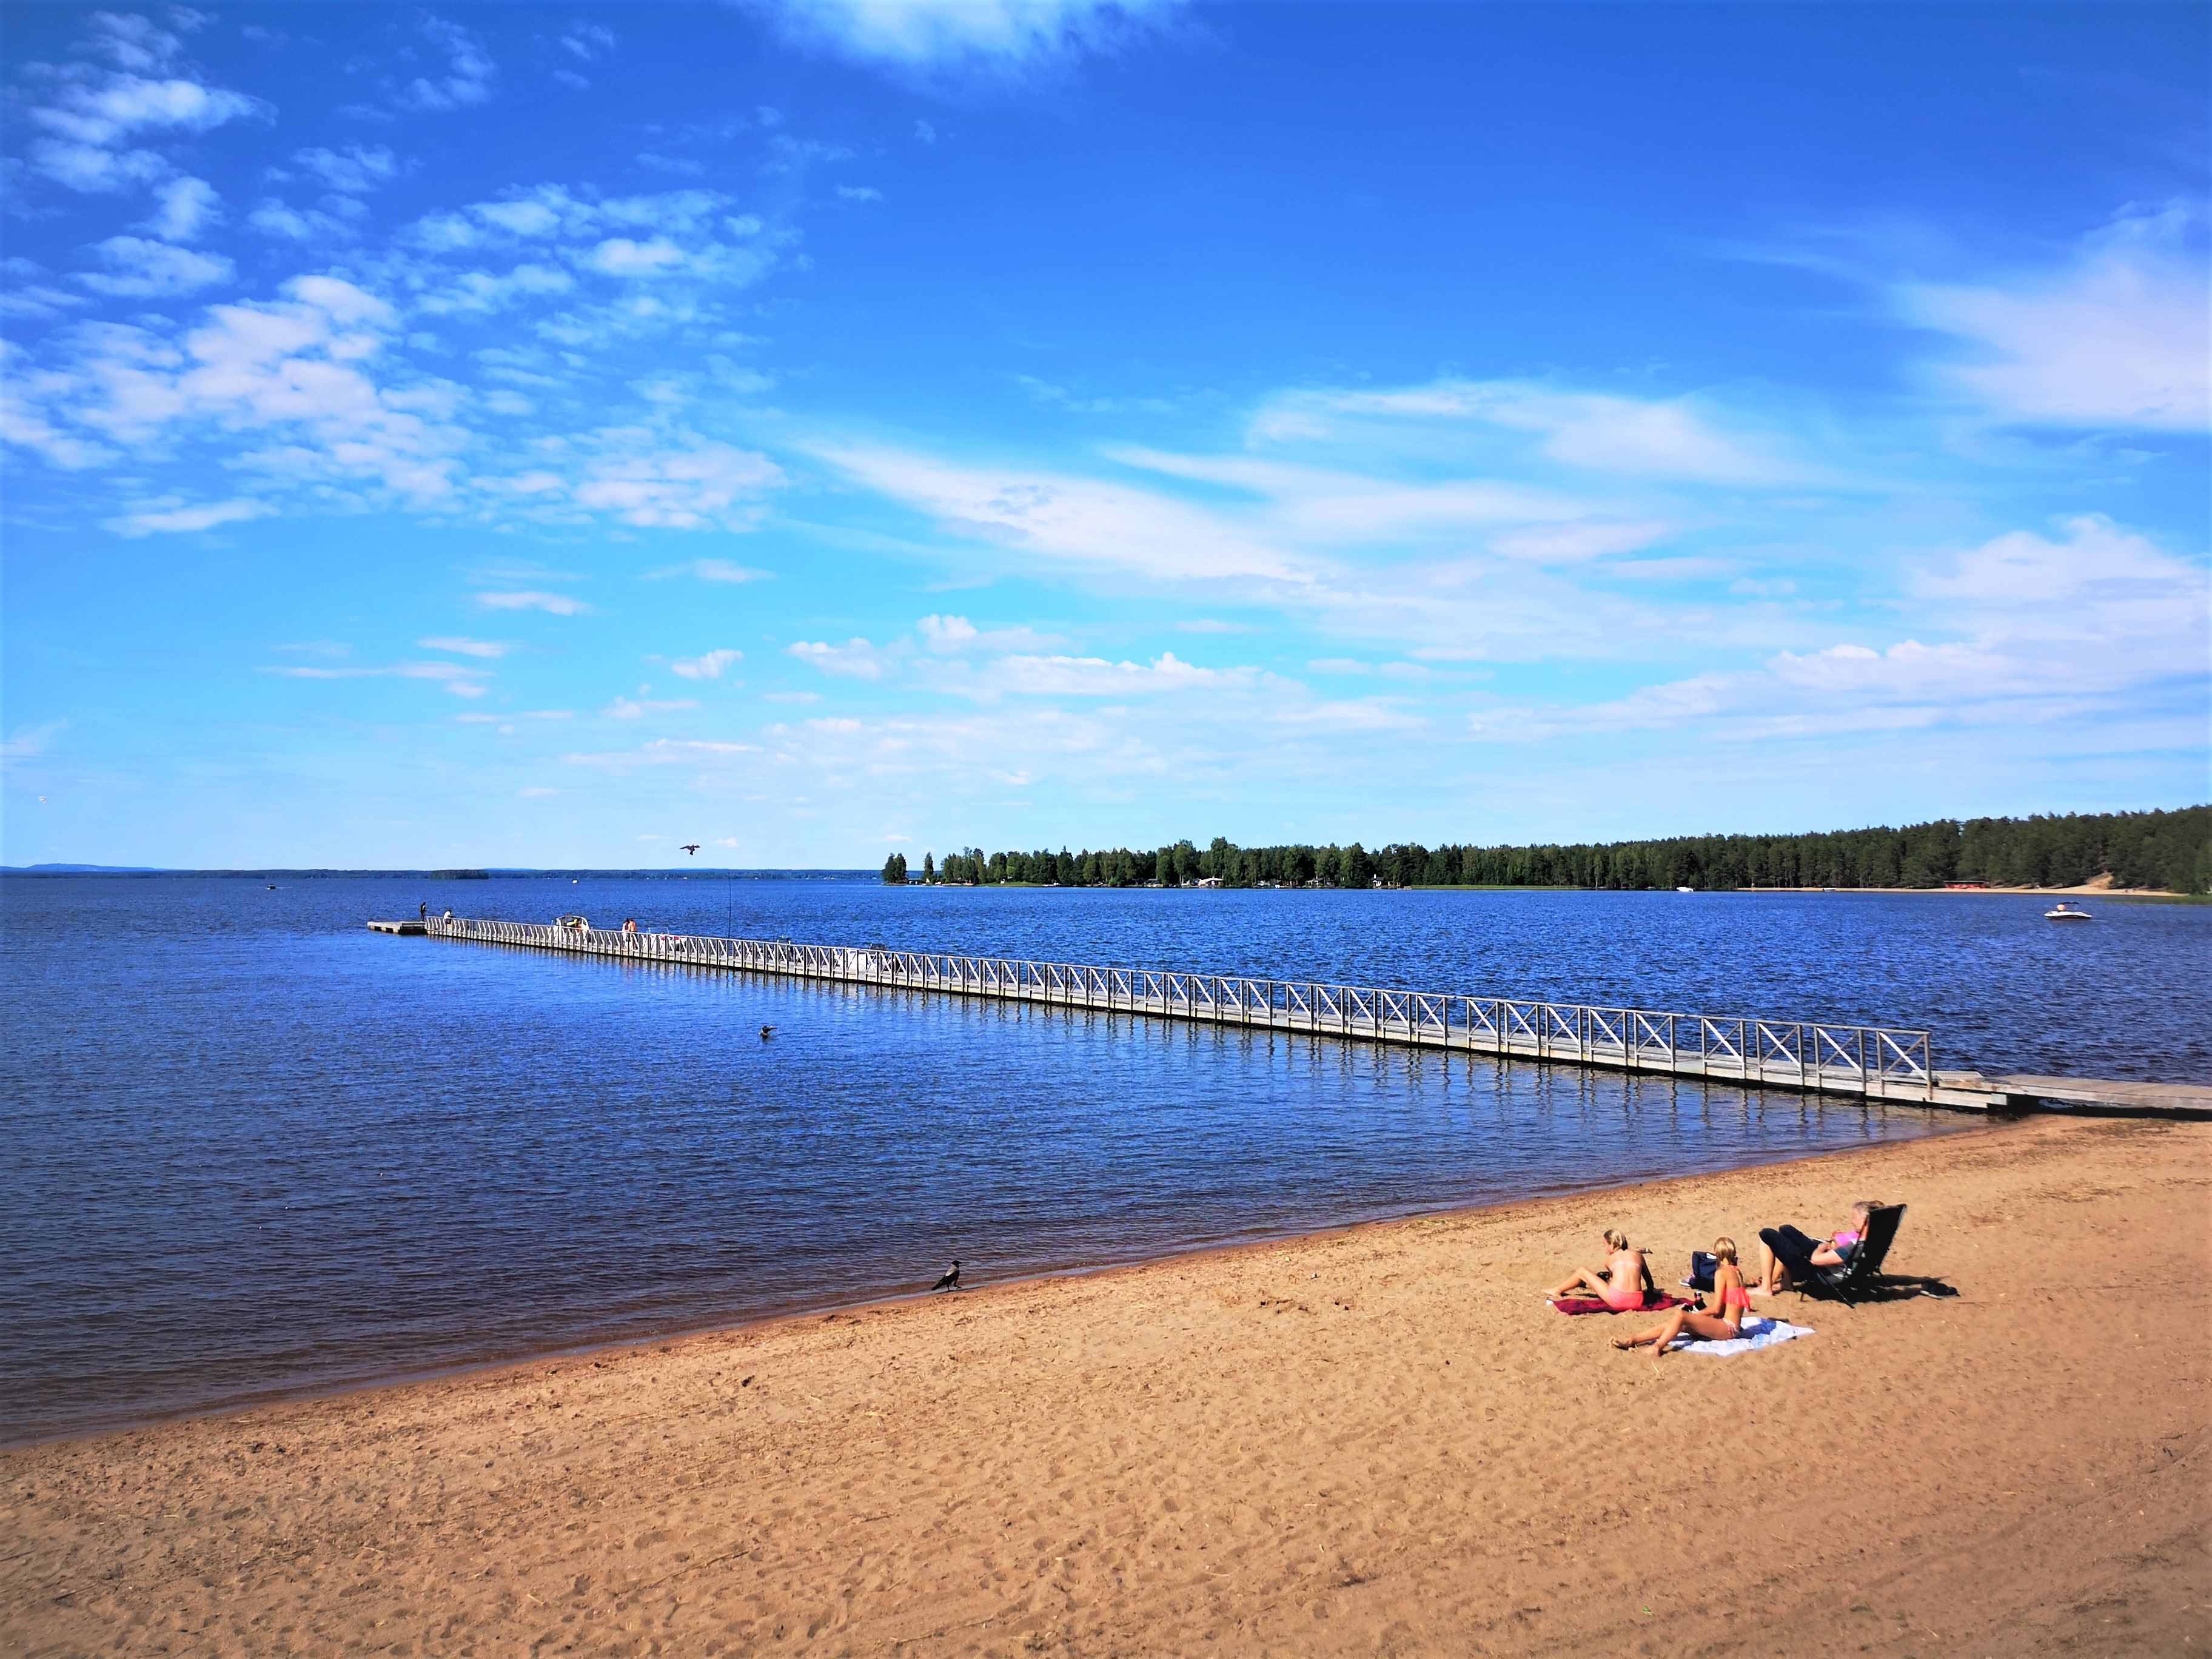 Årsunda strandbad - bathing place